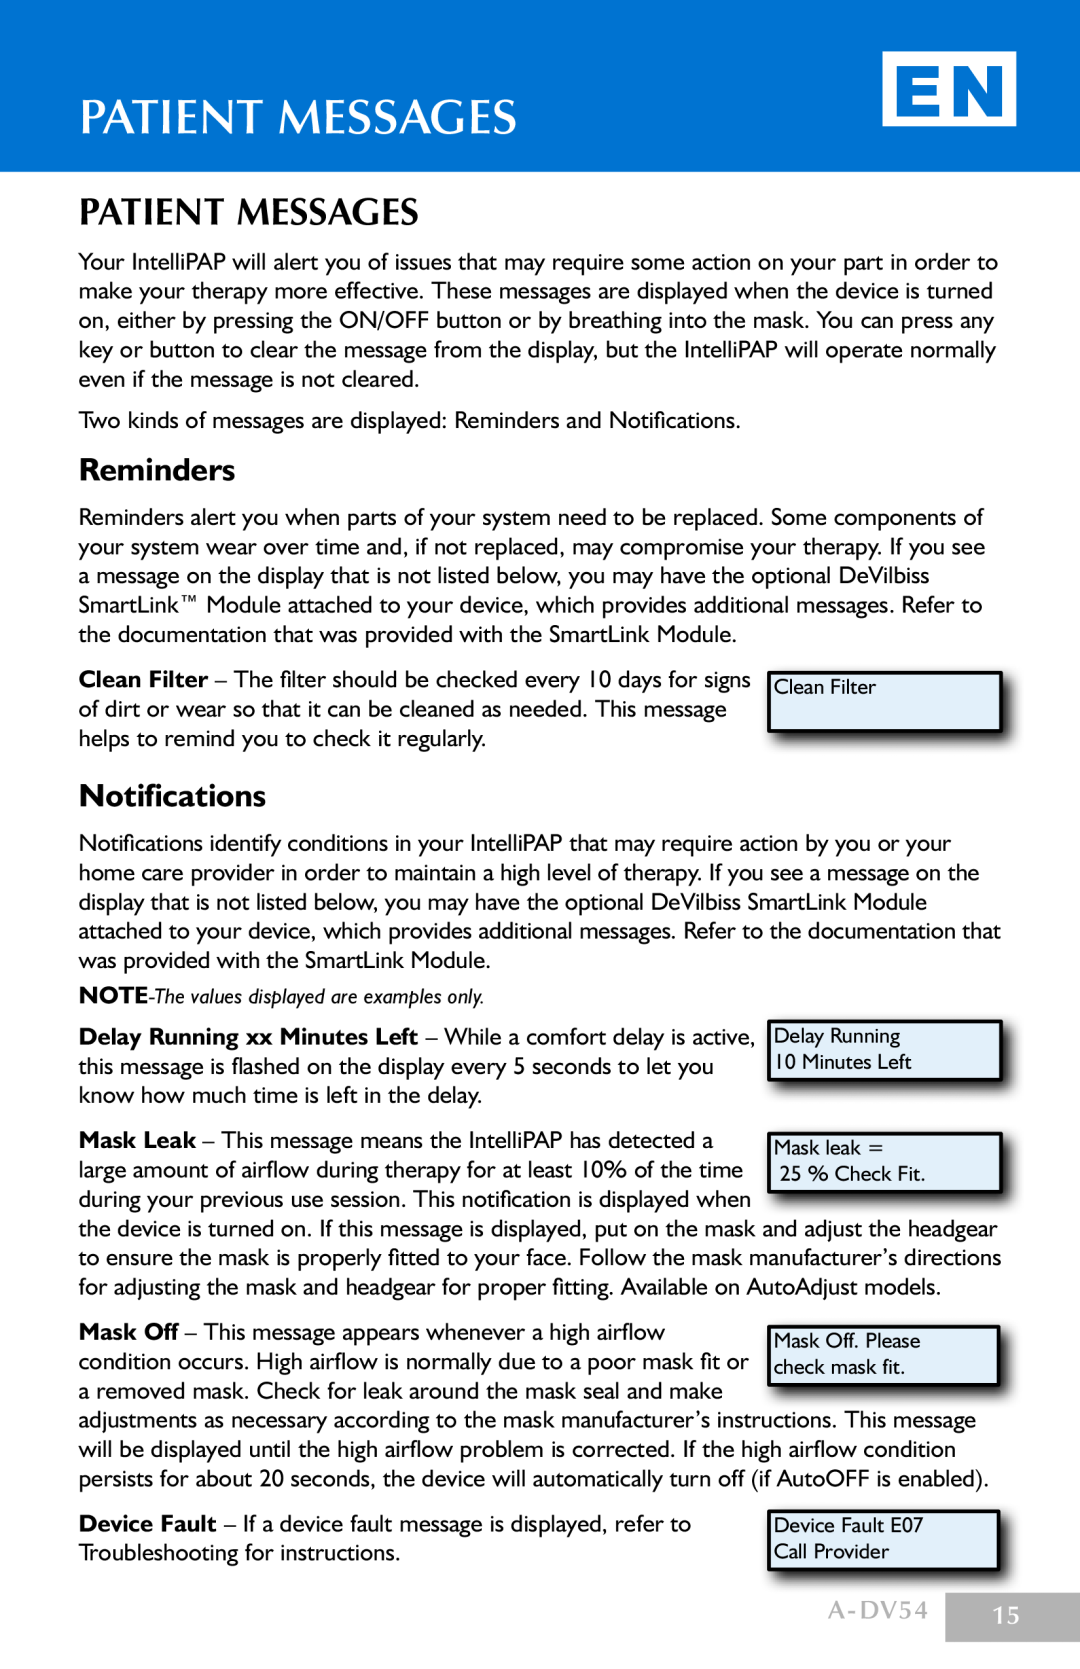 DeVillbiss Air Power Company manual patient messages, Patient MESSAGES, Reminders, Notifications, A-DV54 